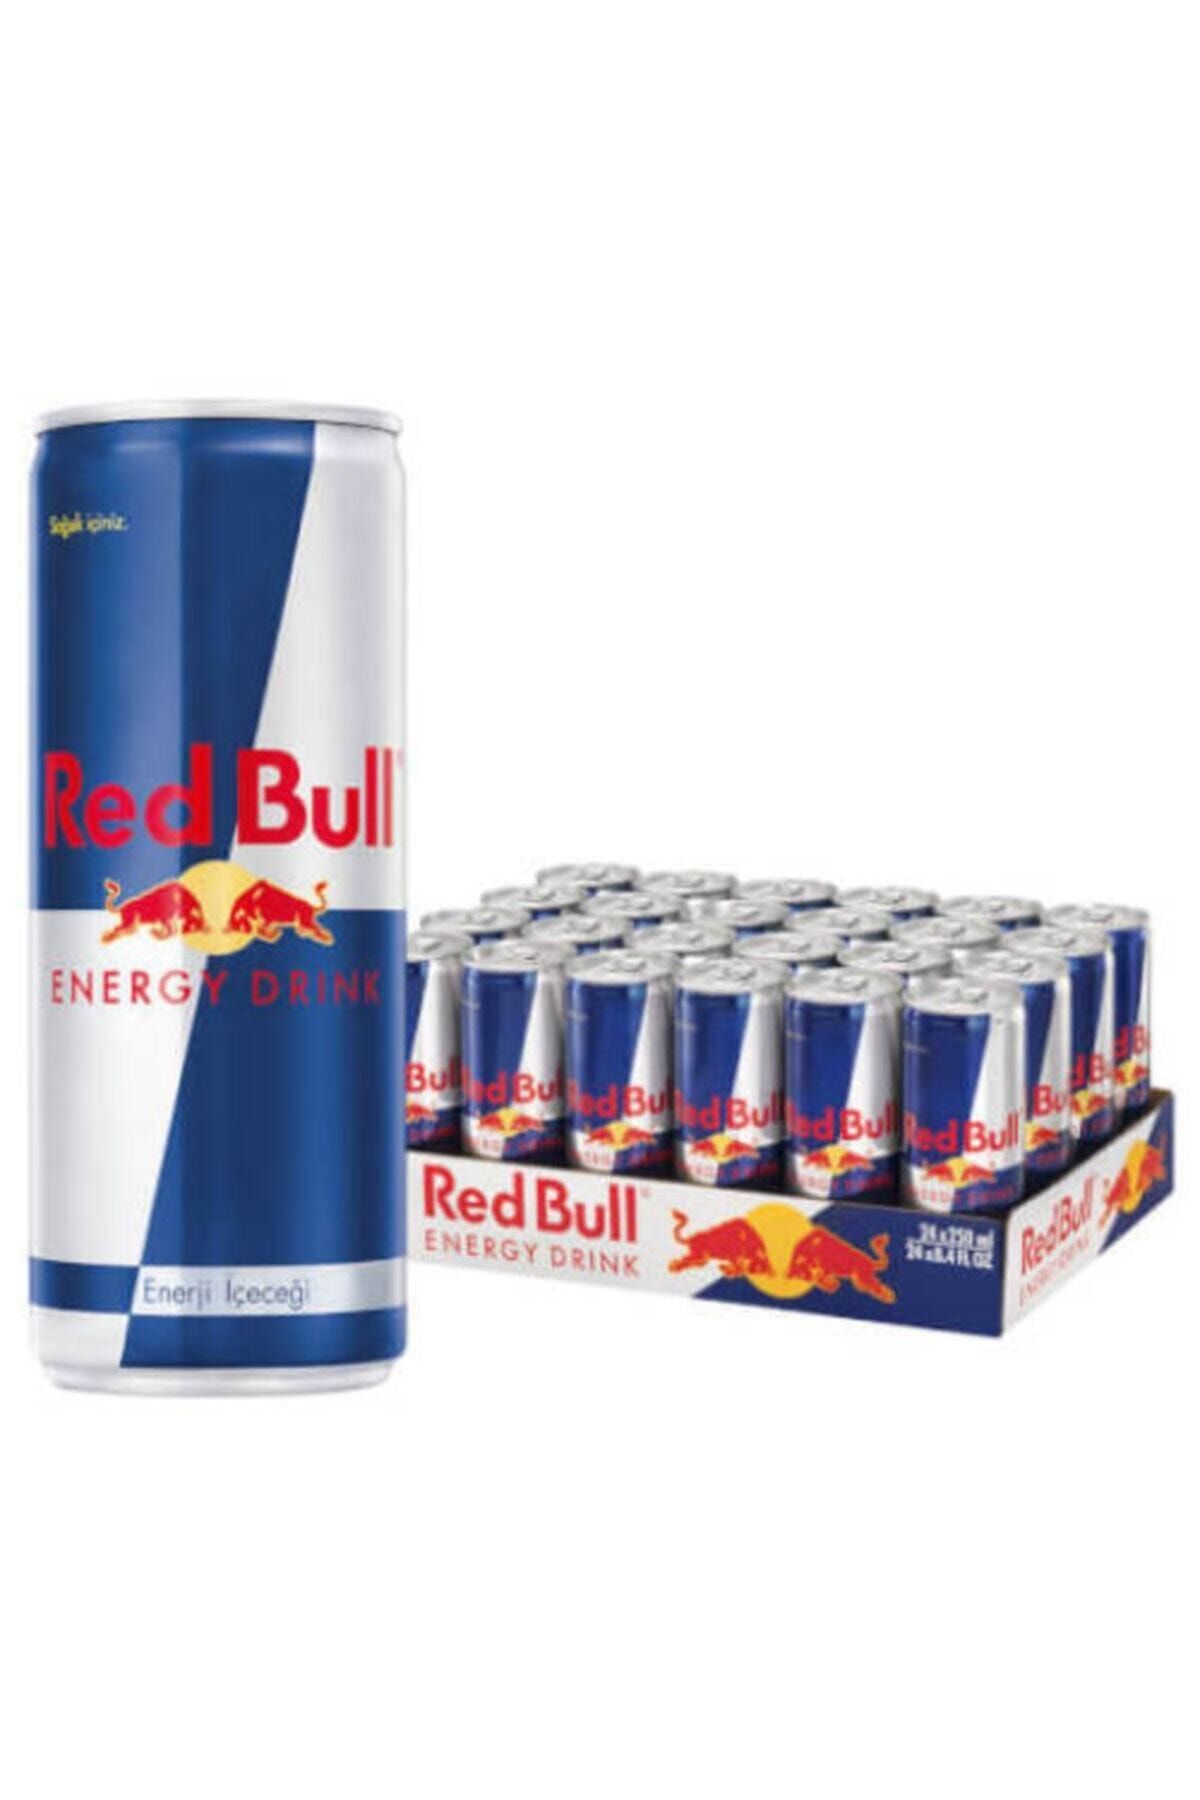 Red Bull Redbul Enerji Içeçegi